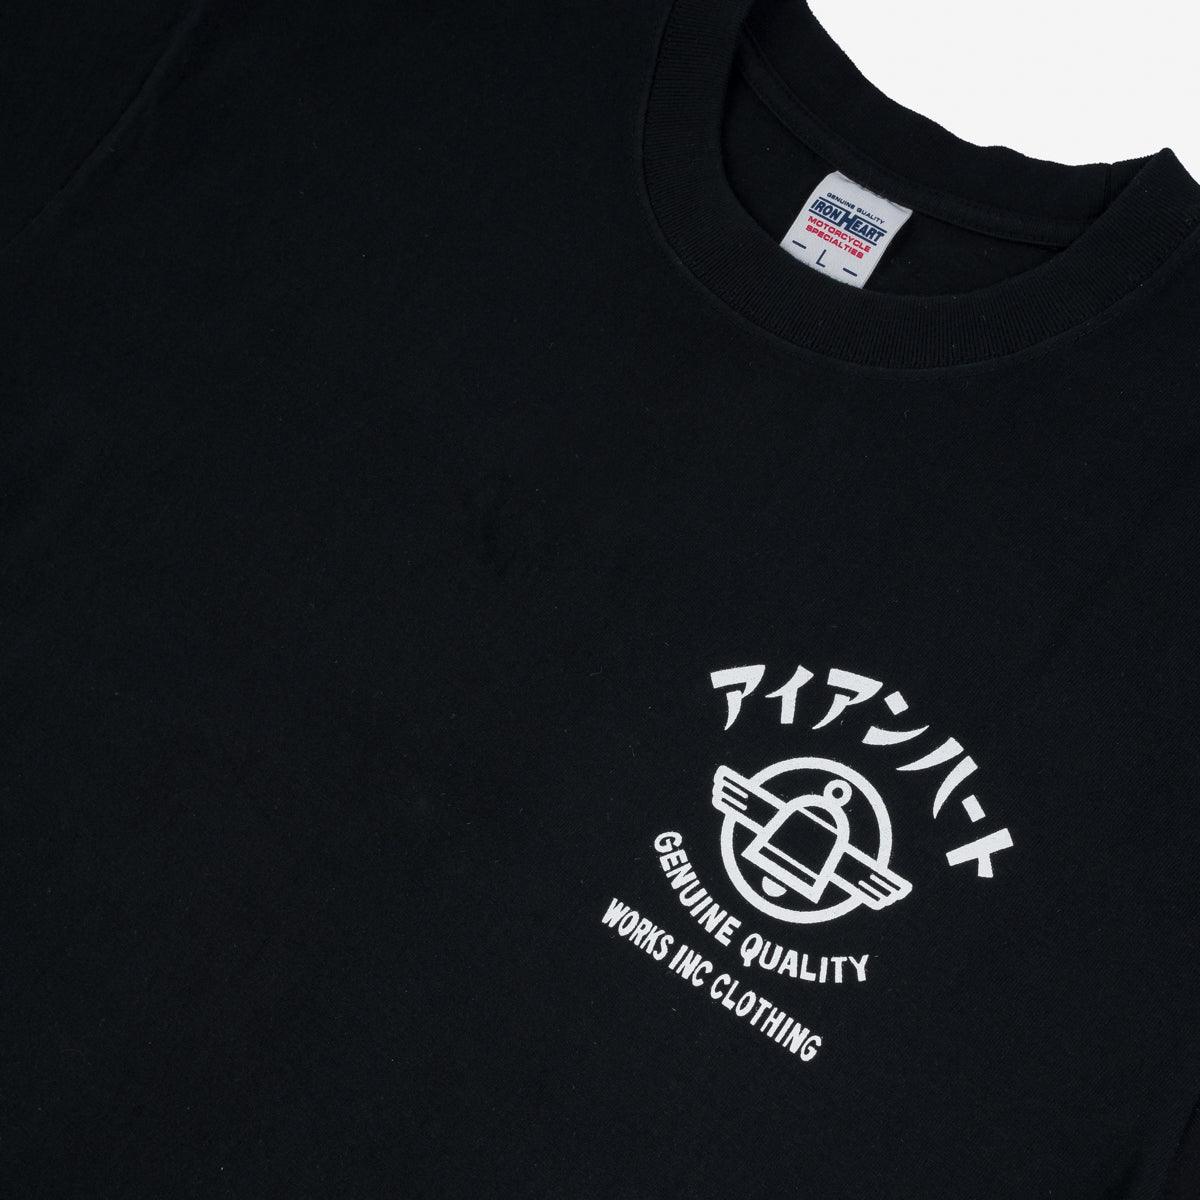 IHPT-2305-BLK - 7.5oz Printed Loopwheel Crew Neck T-Shirt - Black